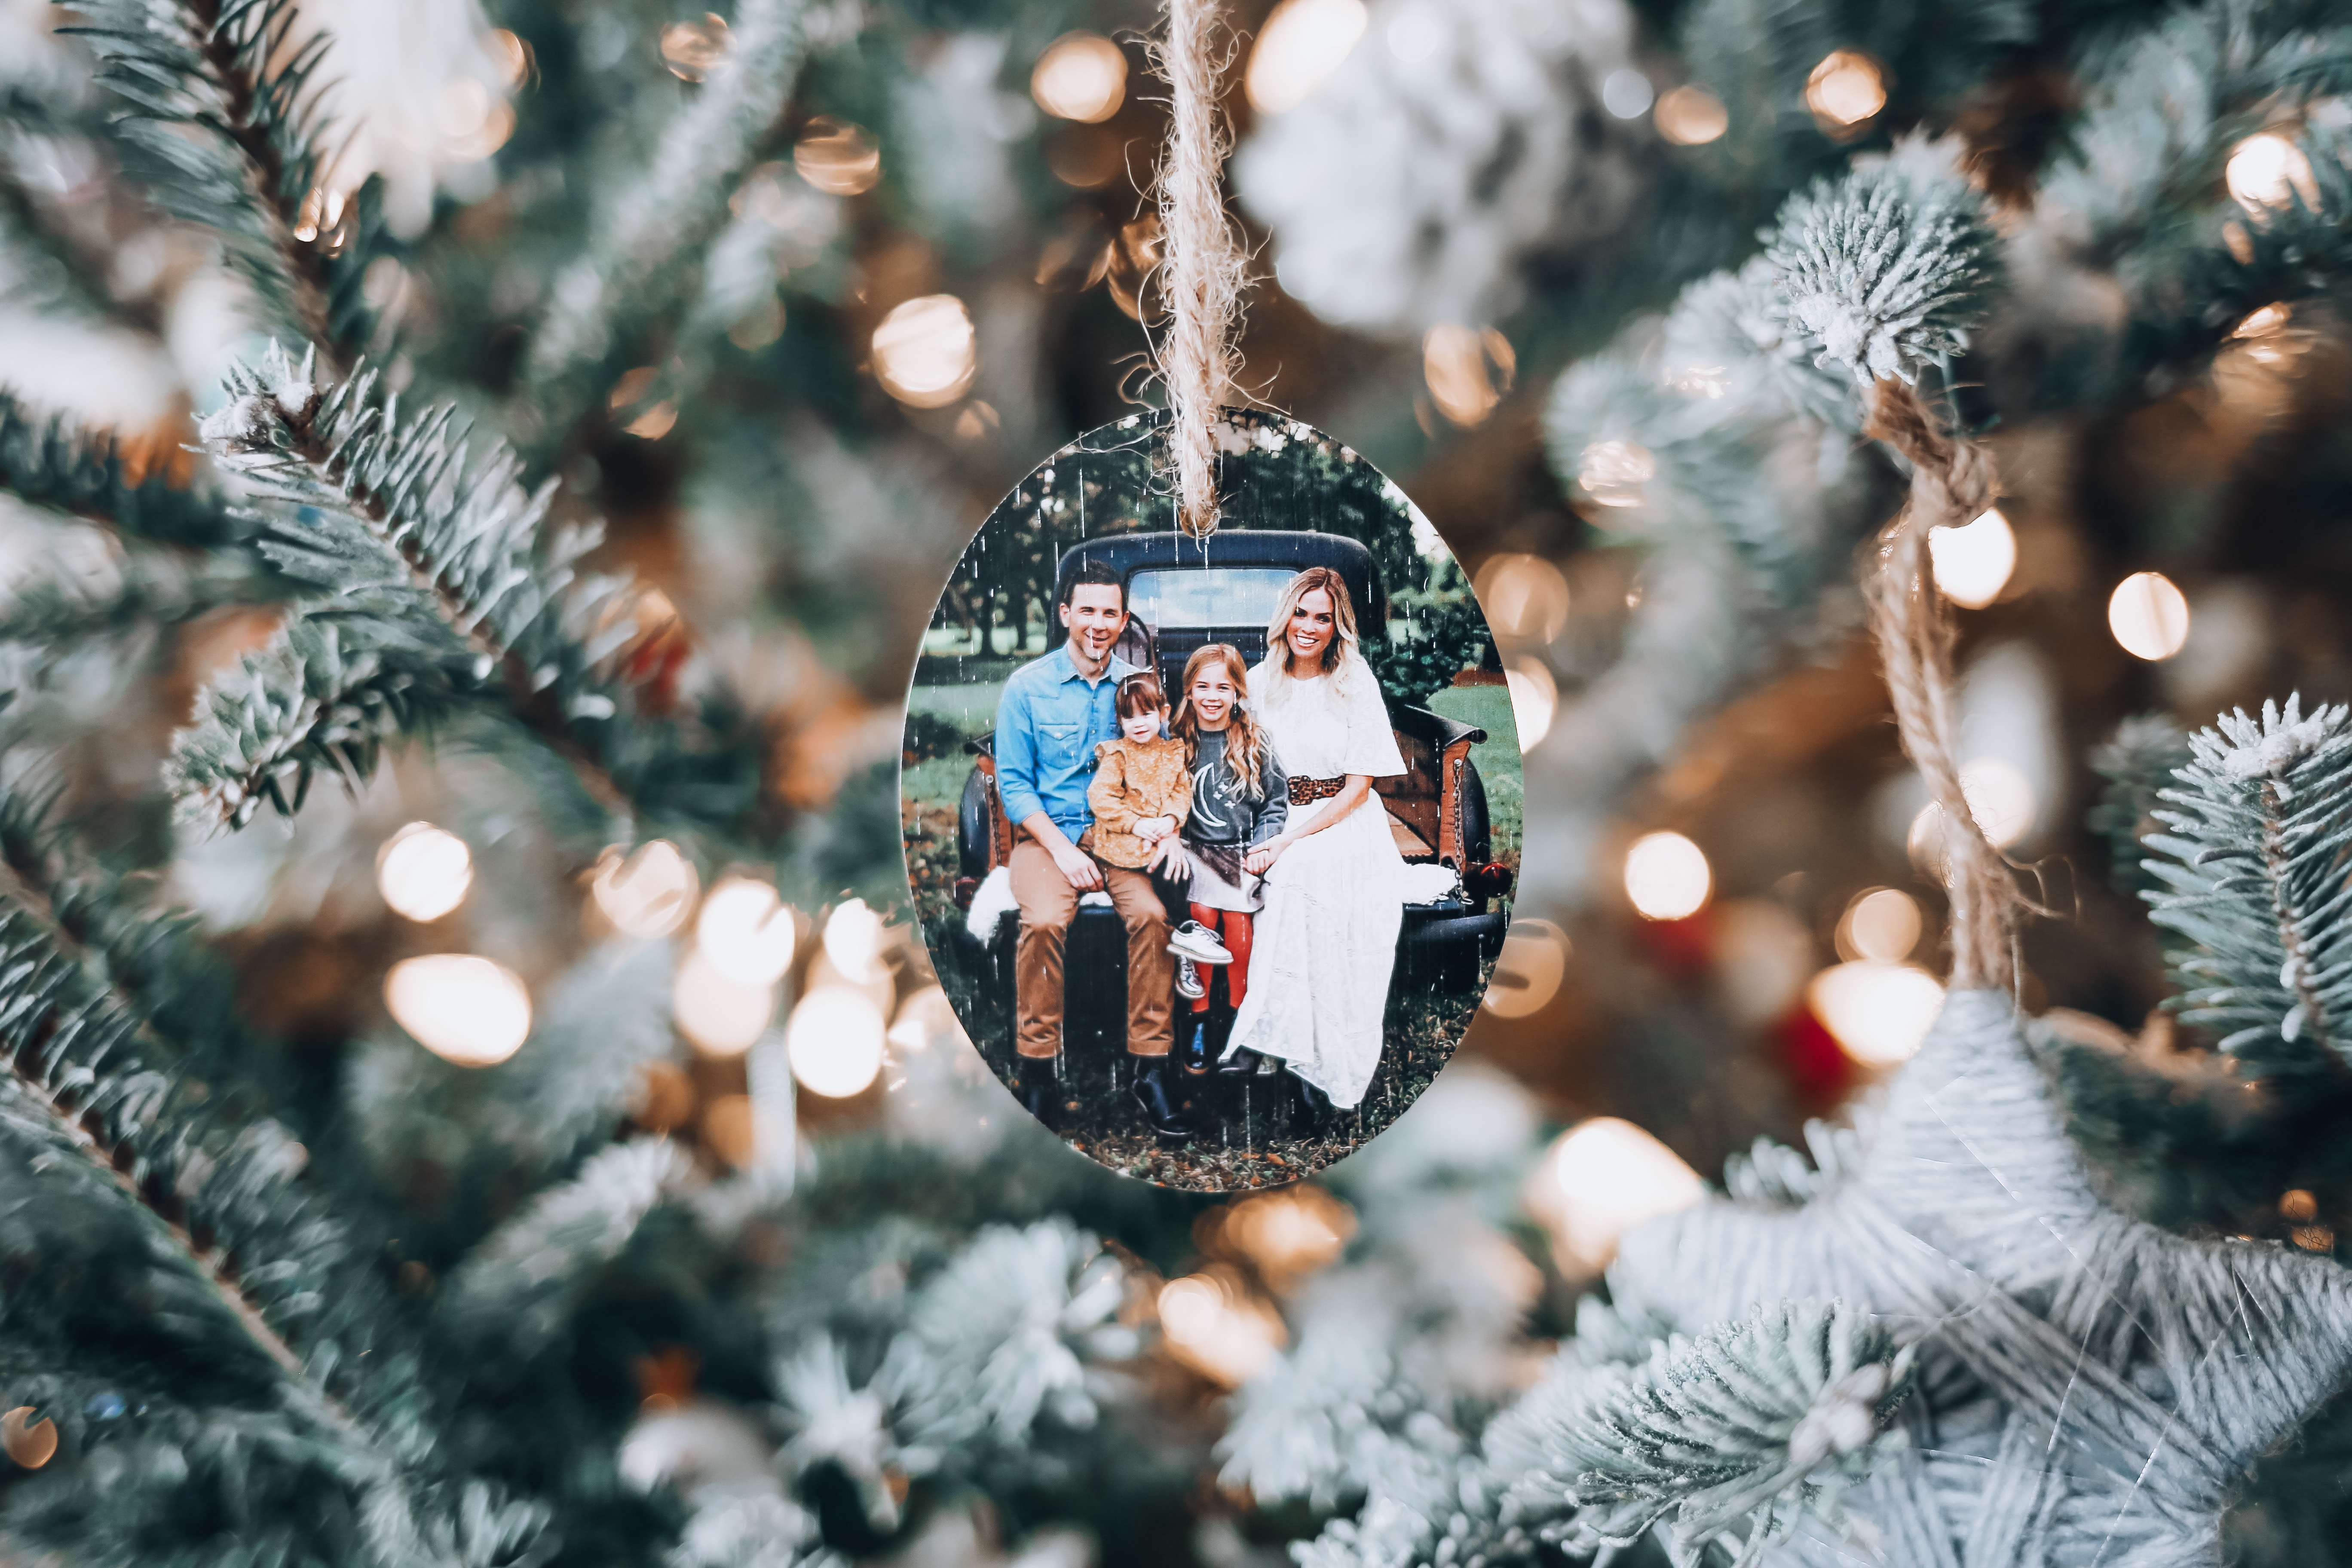 photo ornaments by Kodak Moments, picture ornaments, christmas decor ideas